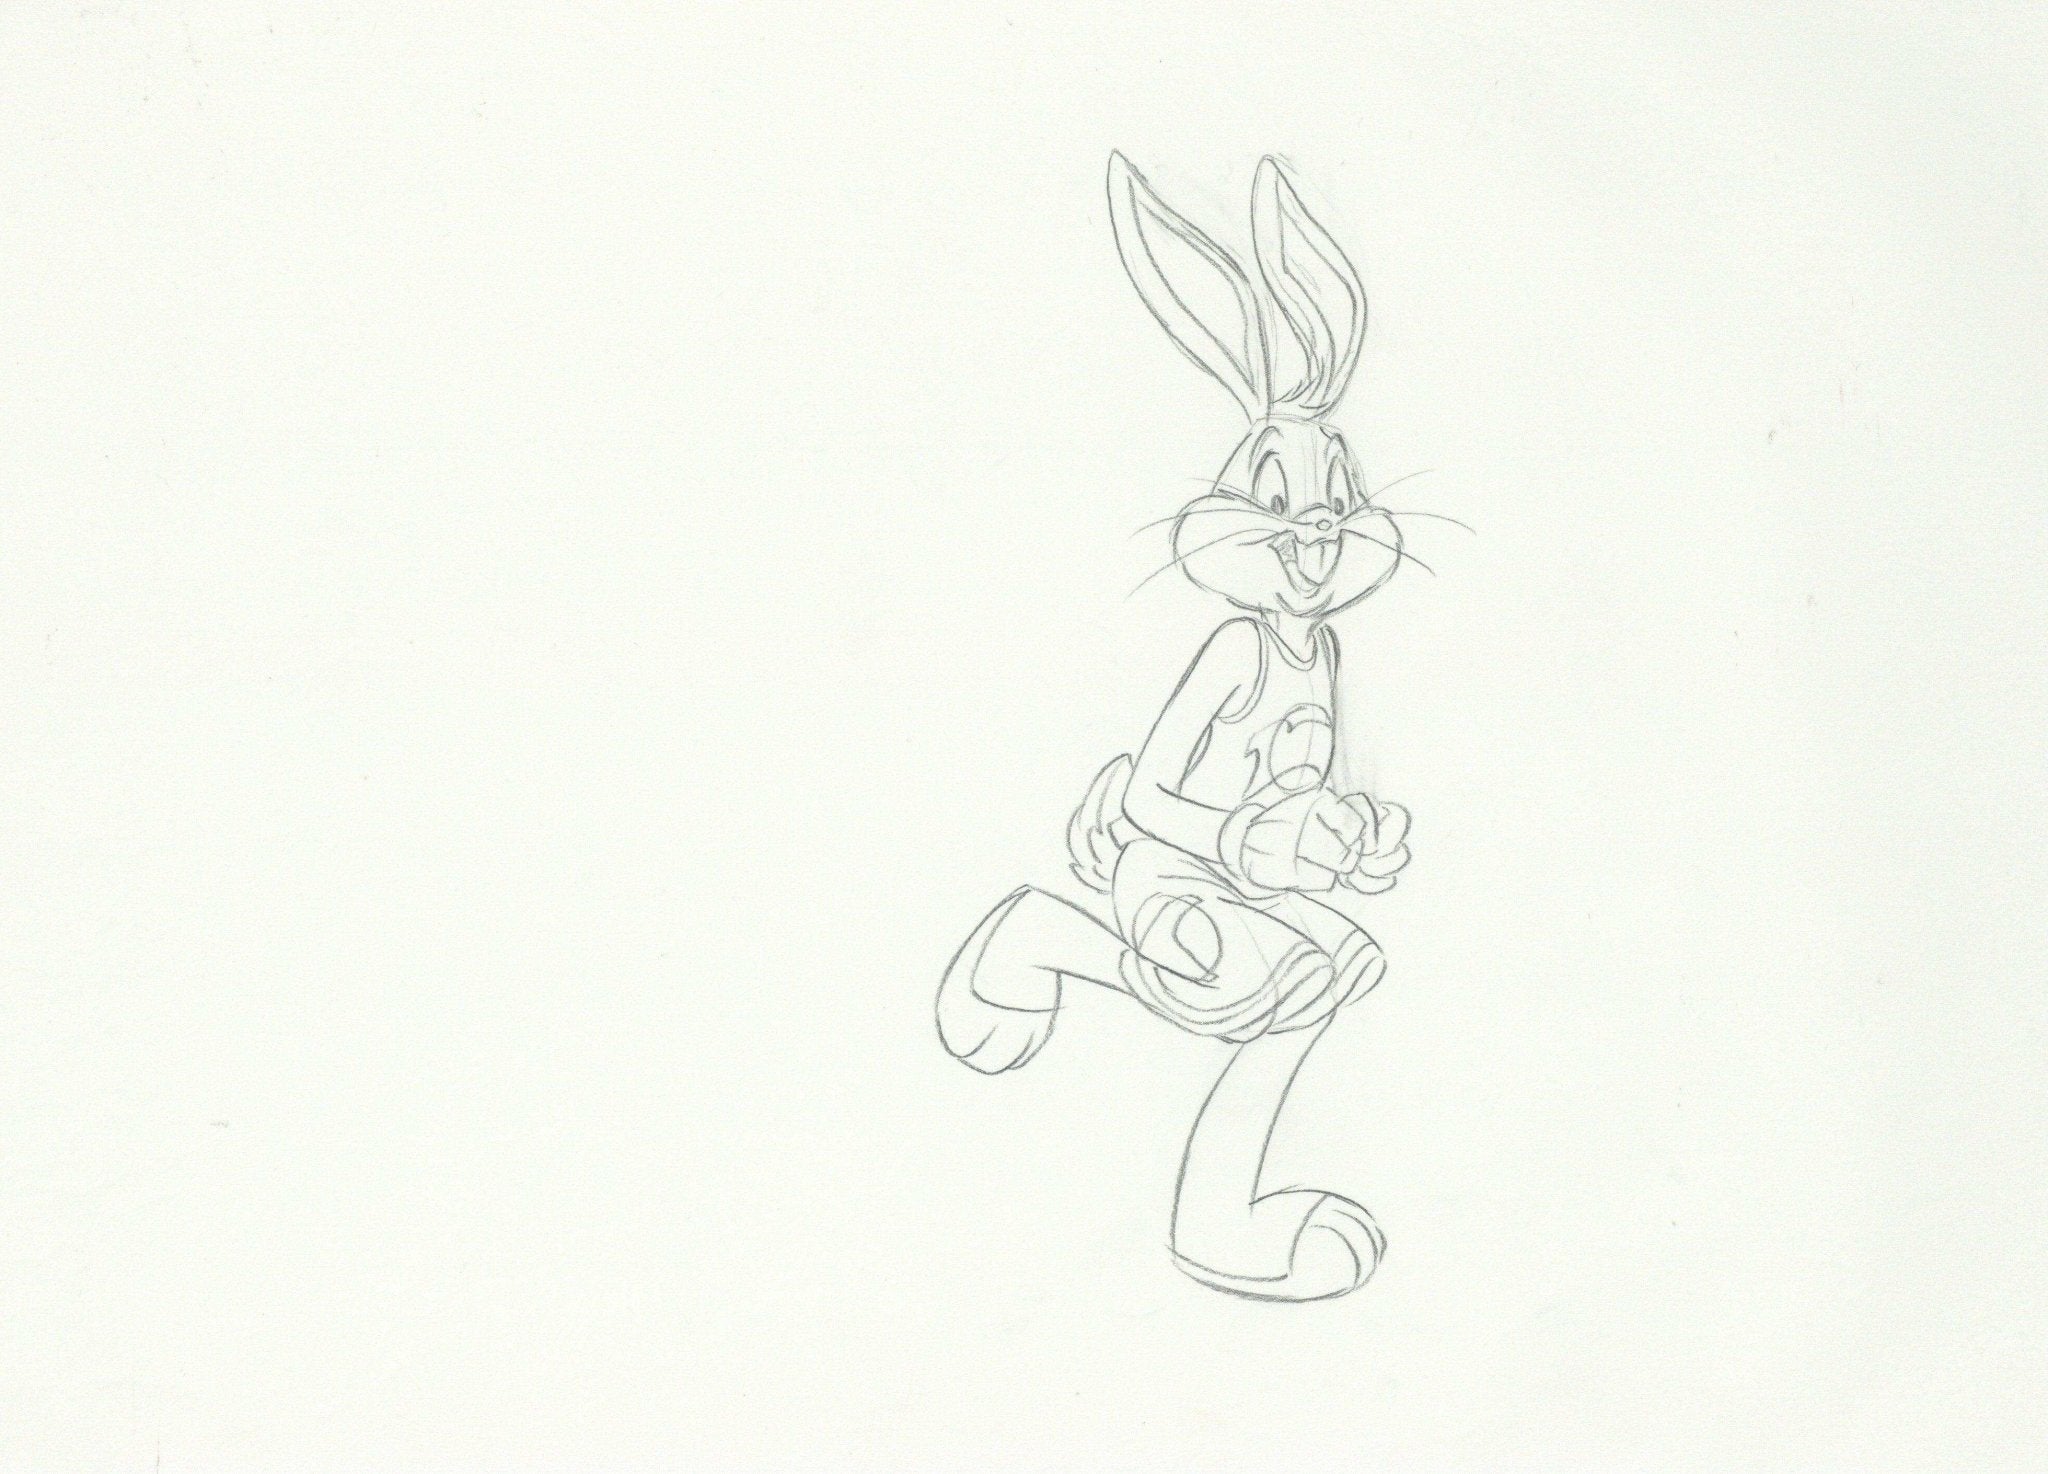 Looney Tunes Studio Artists - Space Jam Original Production Drawing:  Michael Jordan